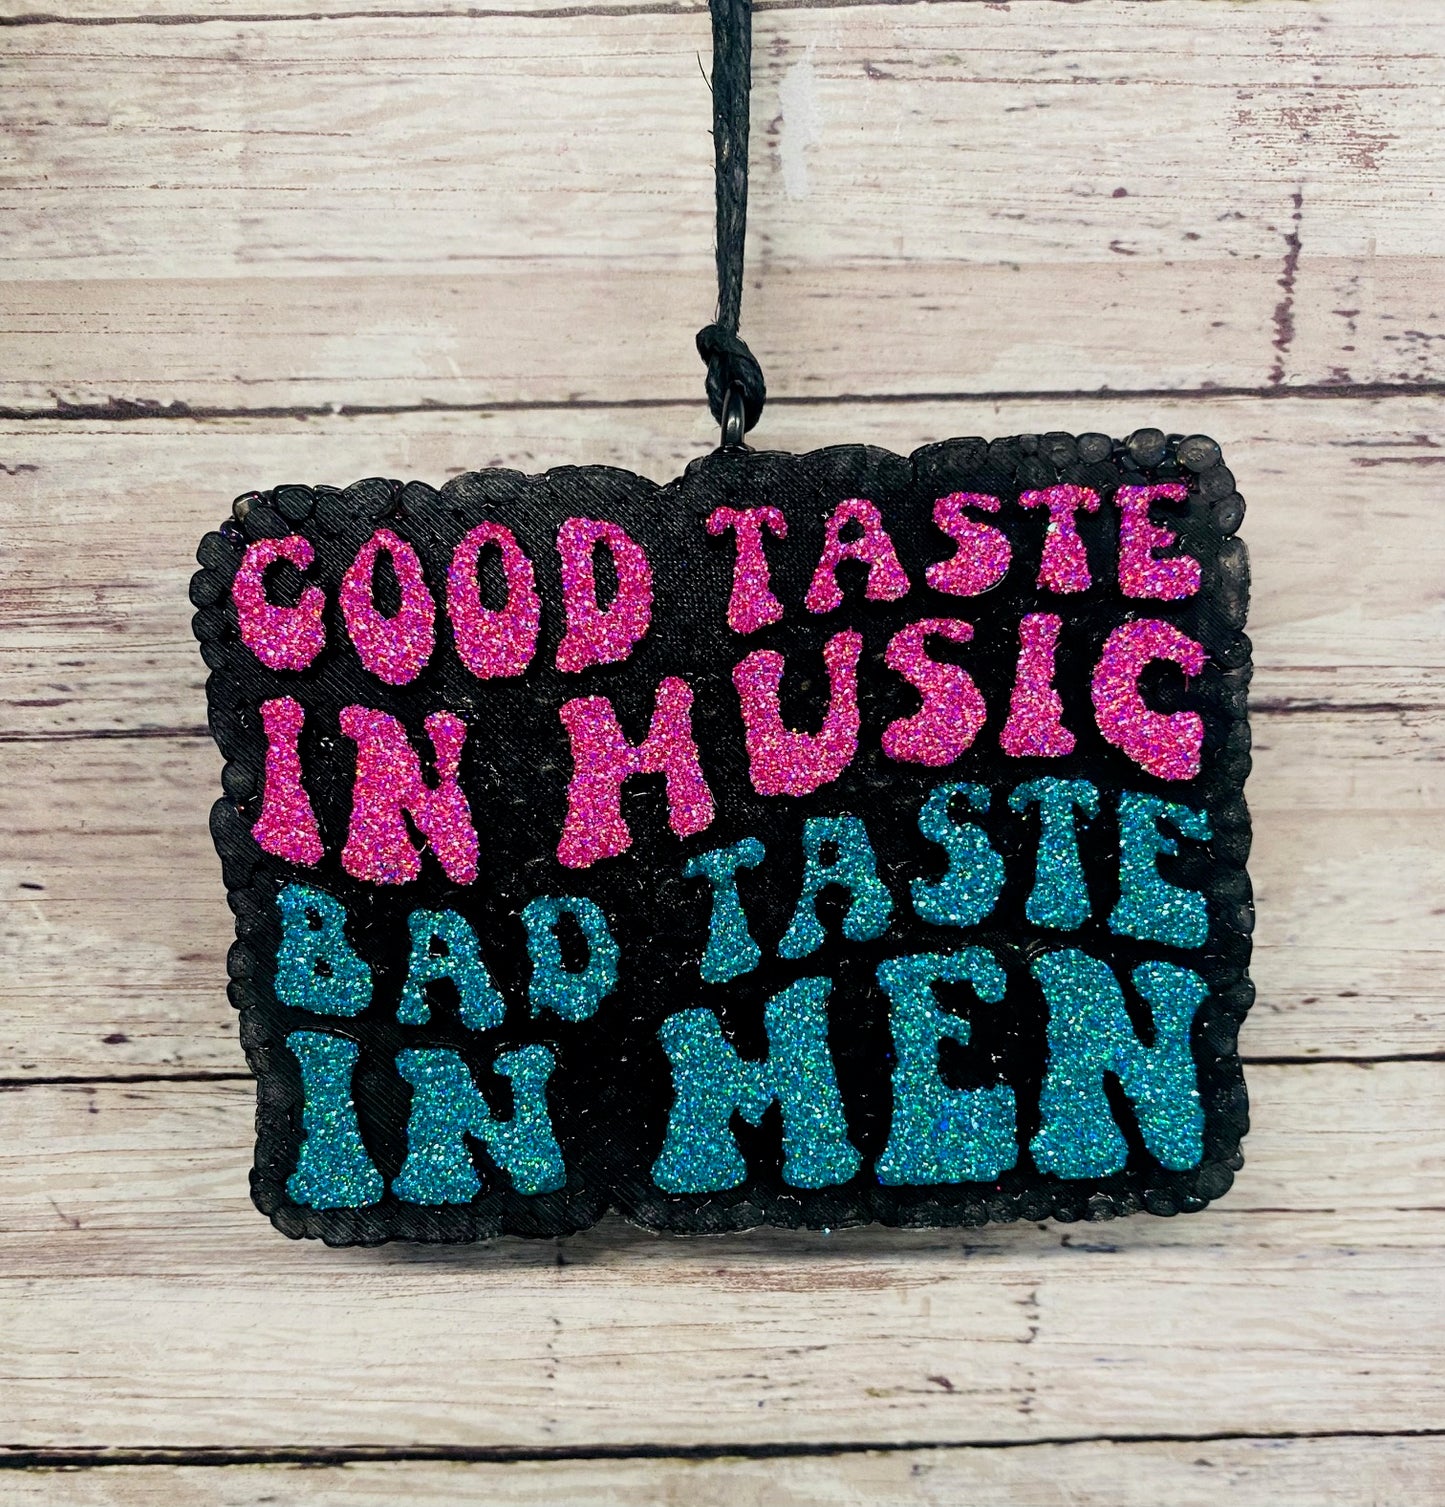 Good Taste in Music, Bad Taste in Men